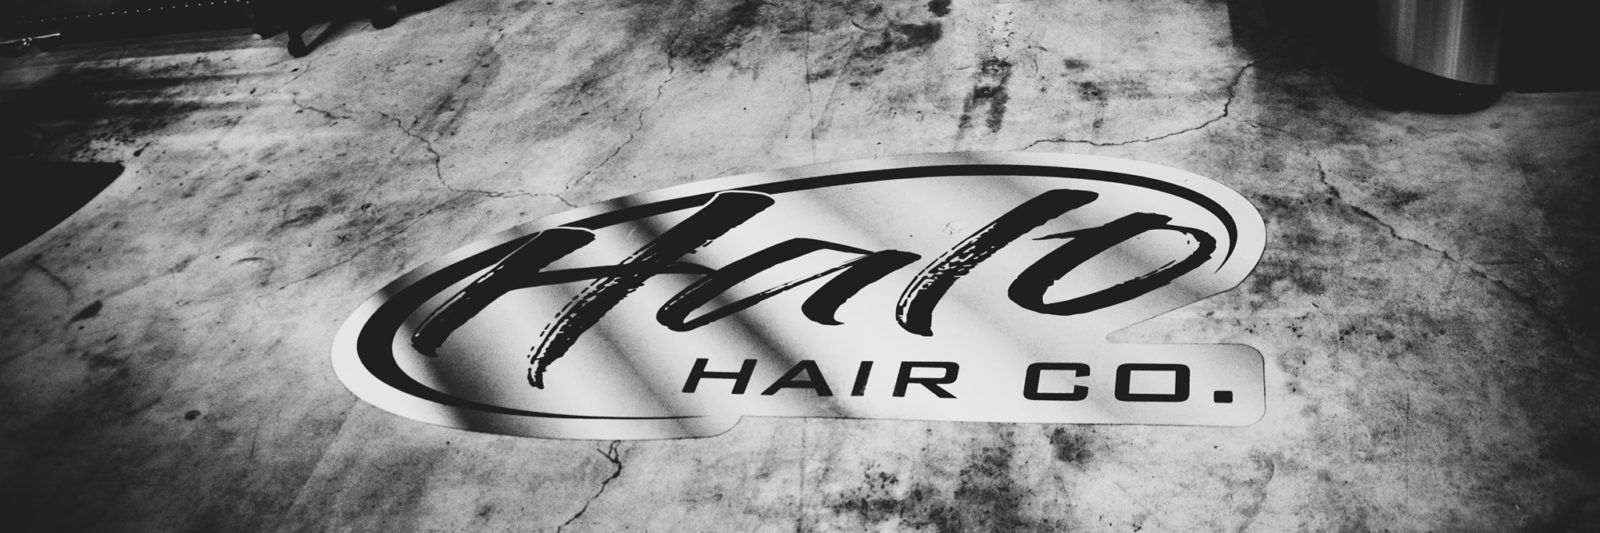 Halo Hair Co. Banner